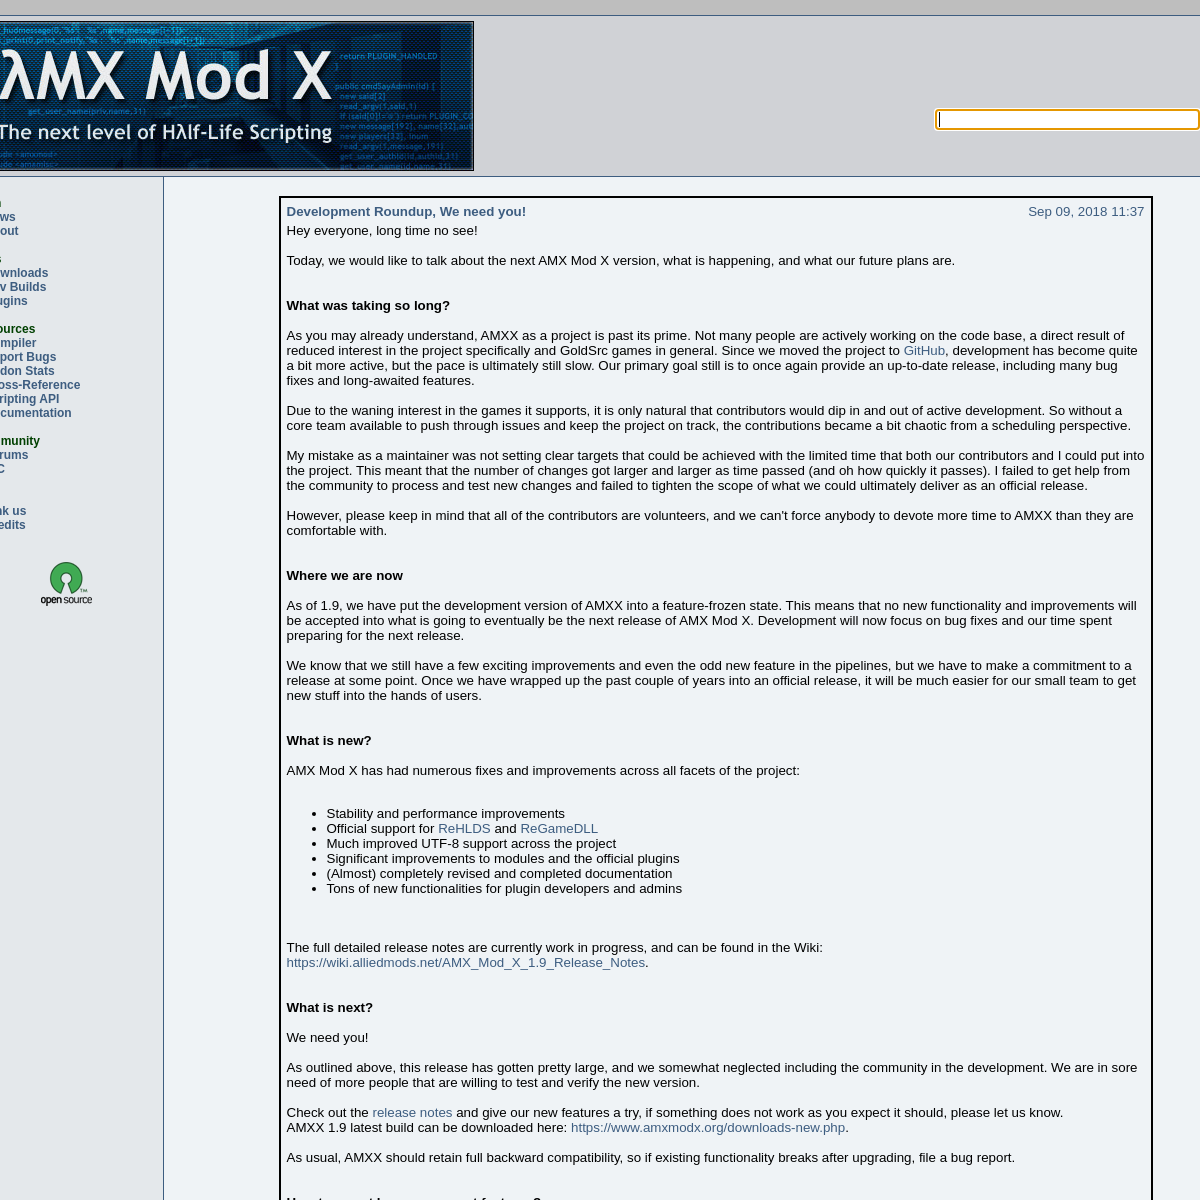 A complete backup of amxmodx.org